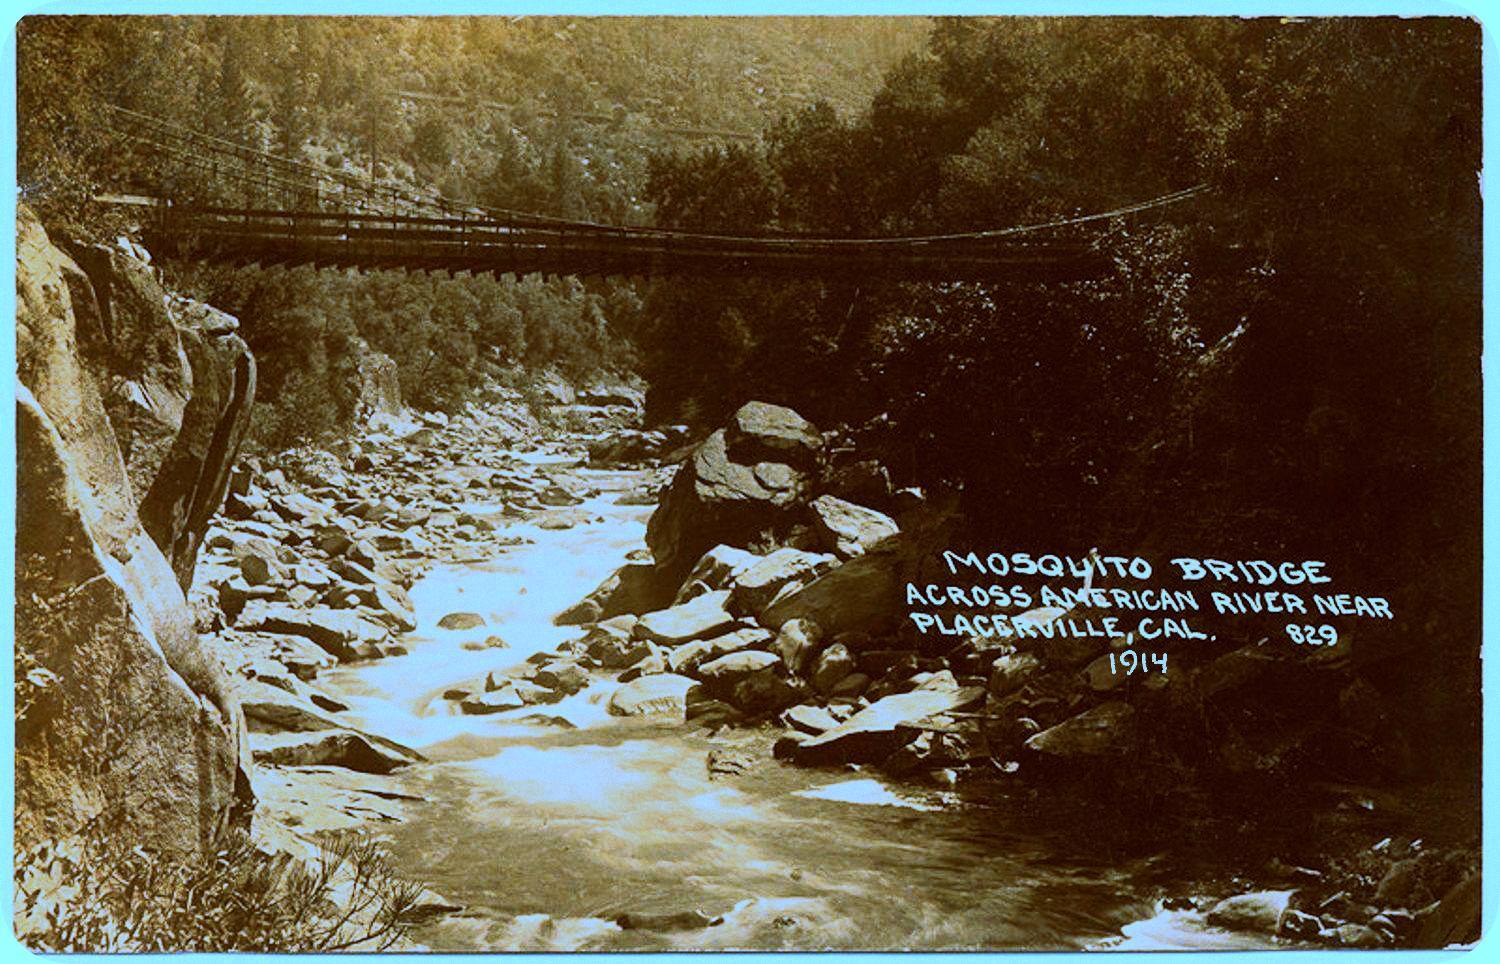 Mosquito Bridge - 1914